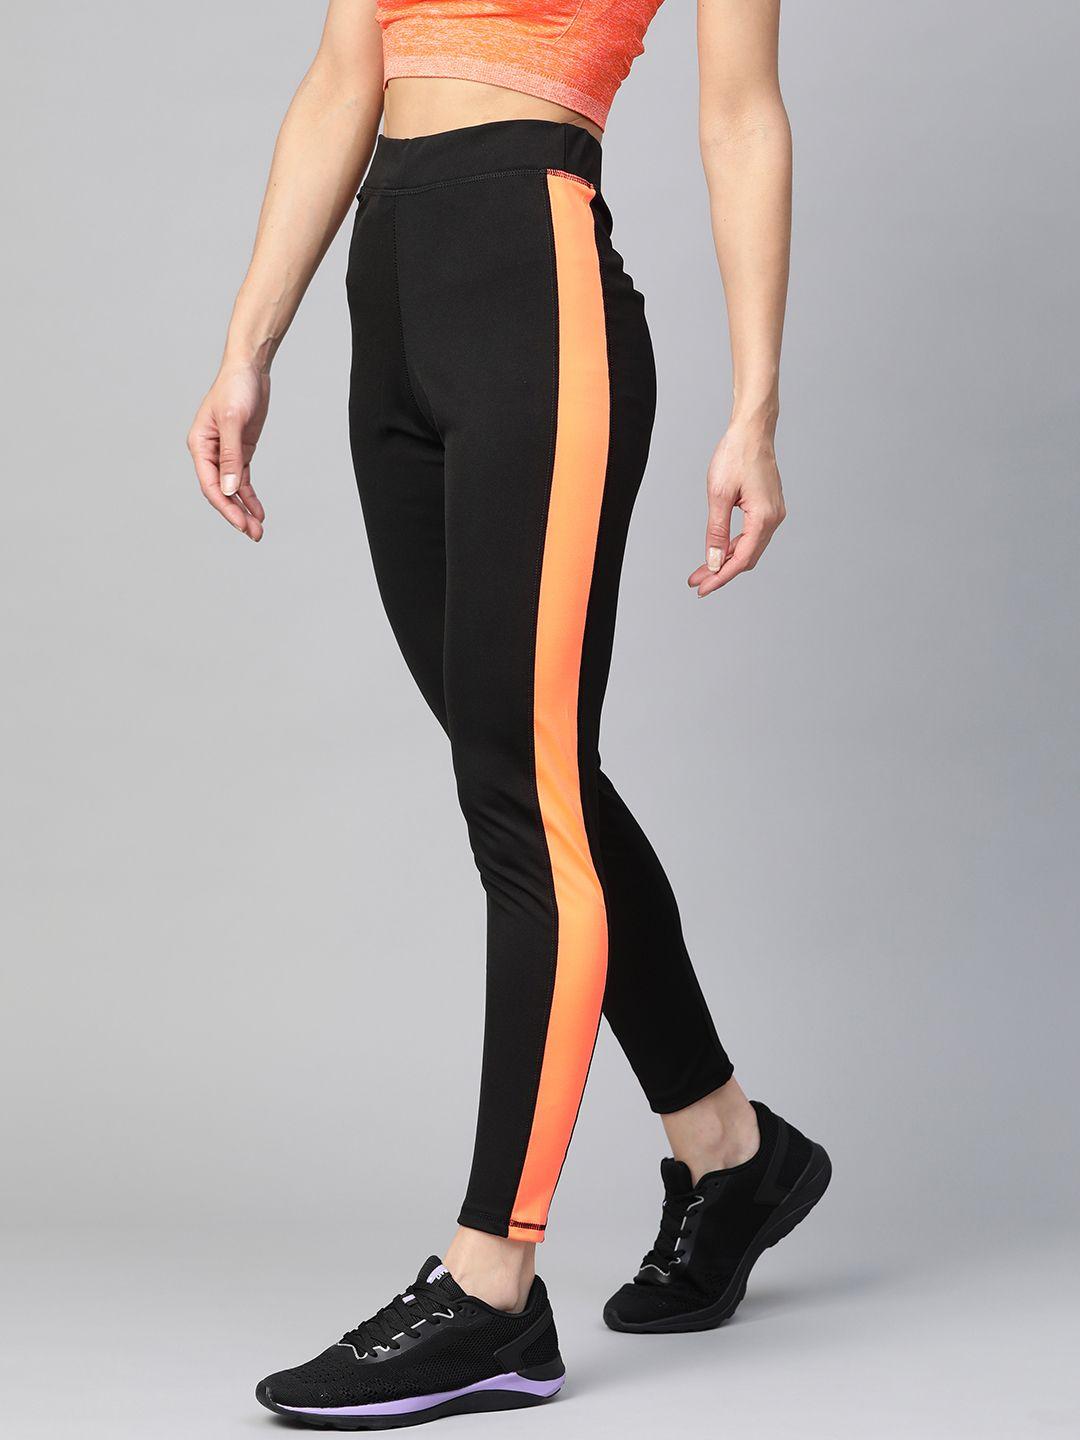 m7 by metronaut women black & neon orange high-rise solid training tights